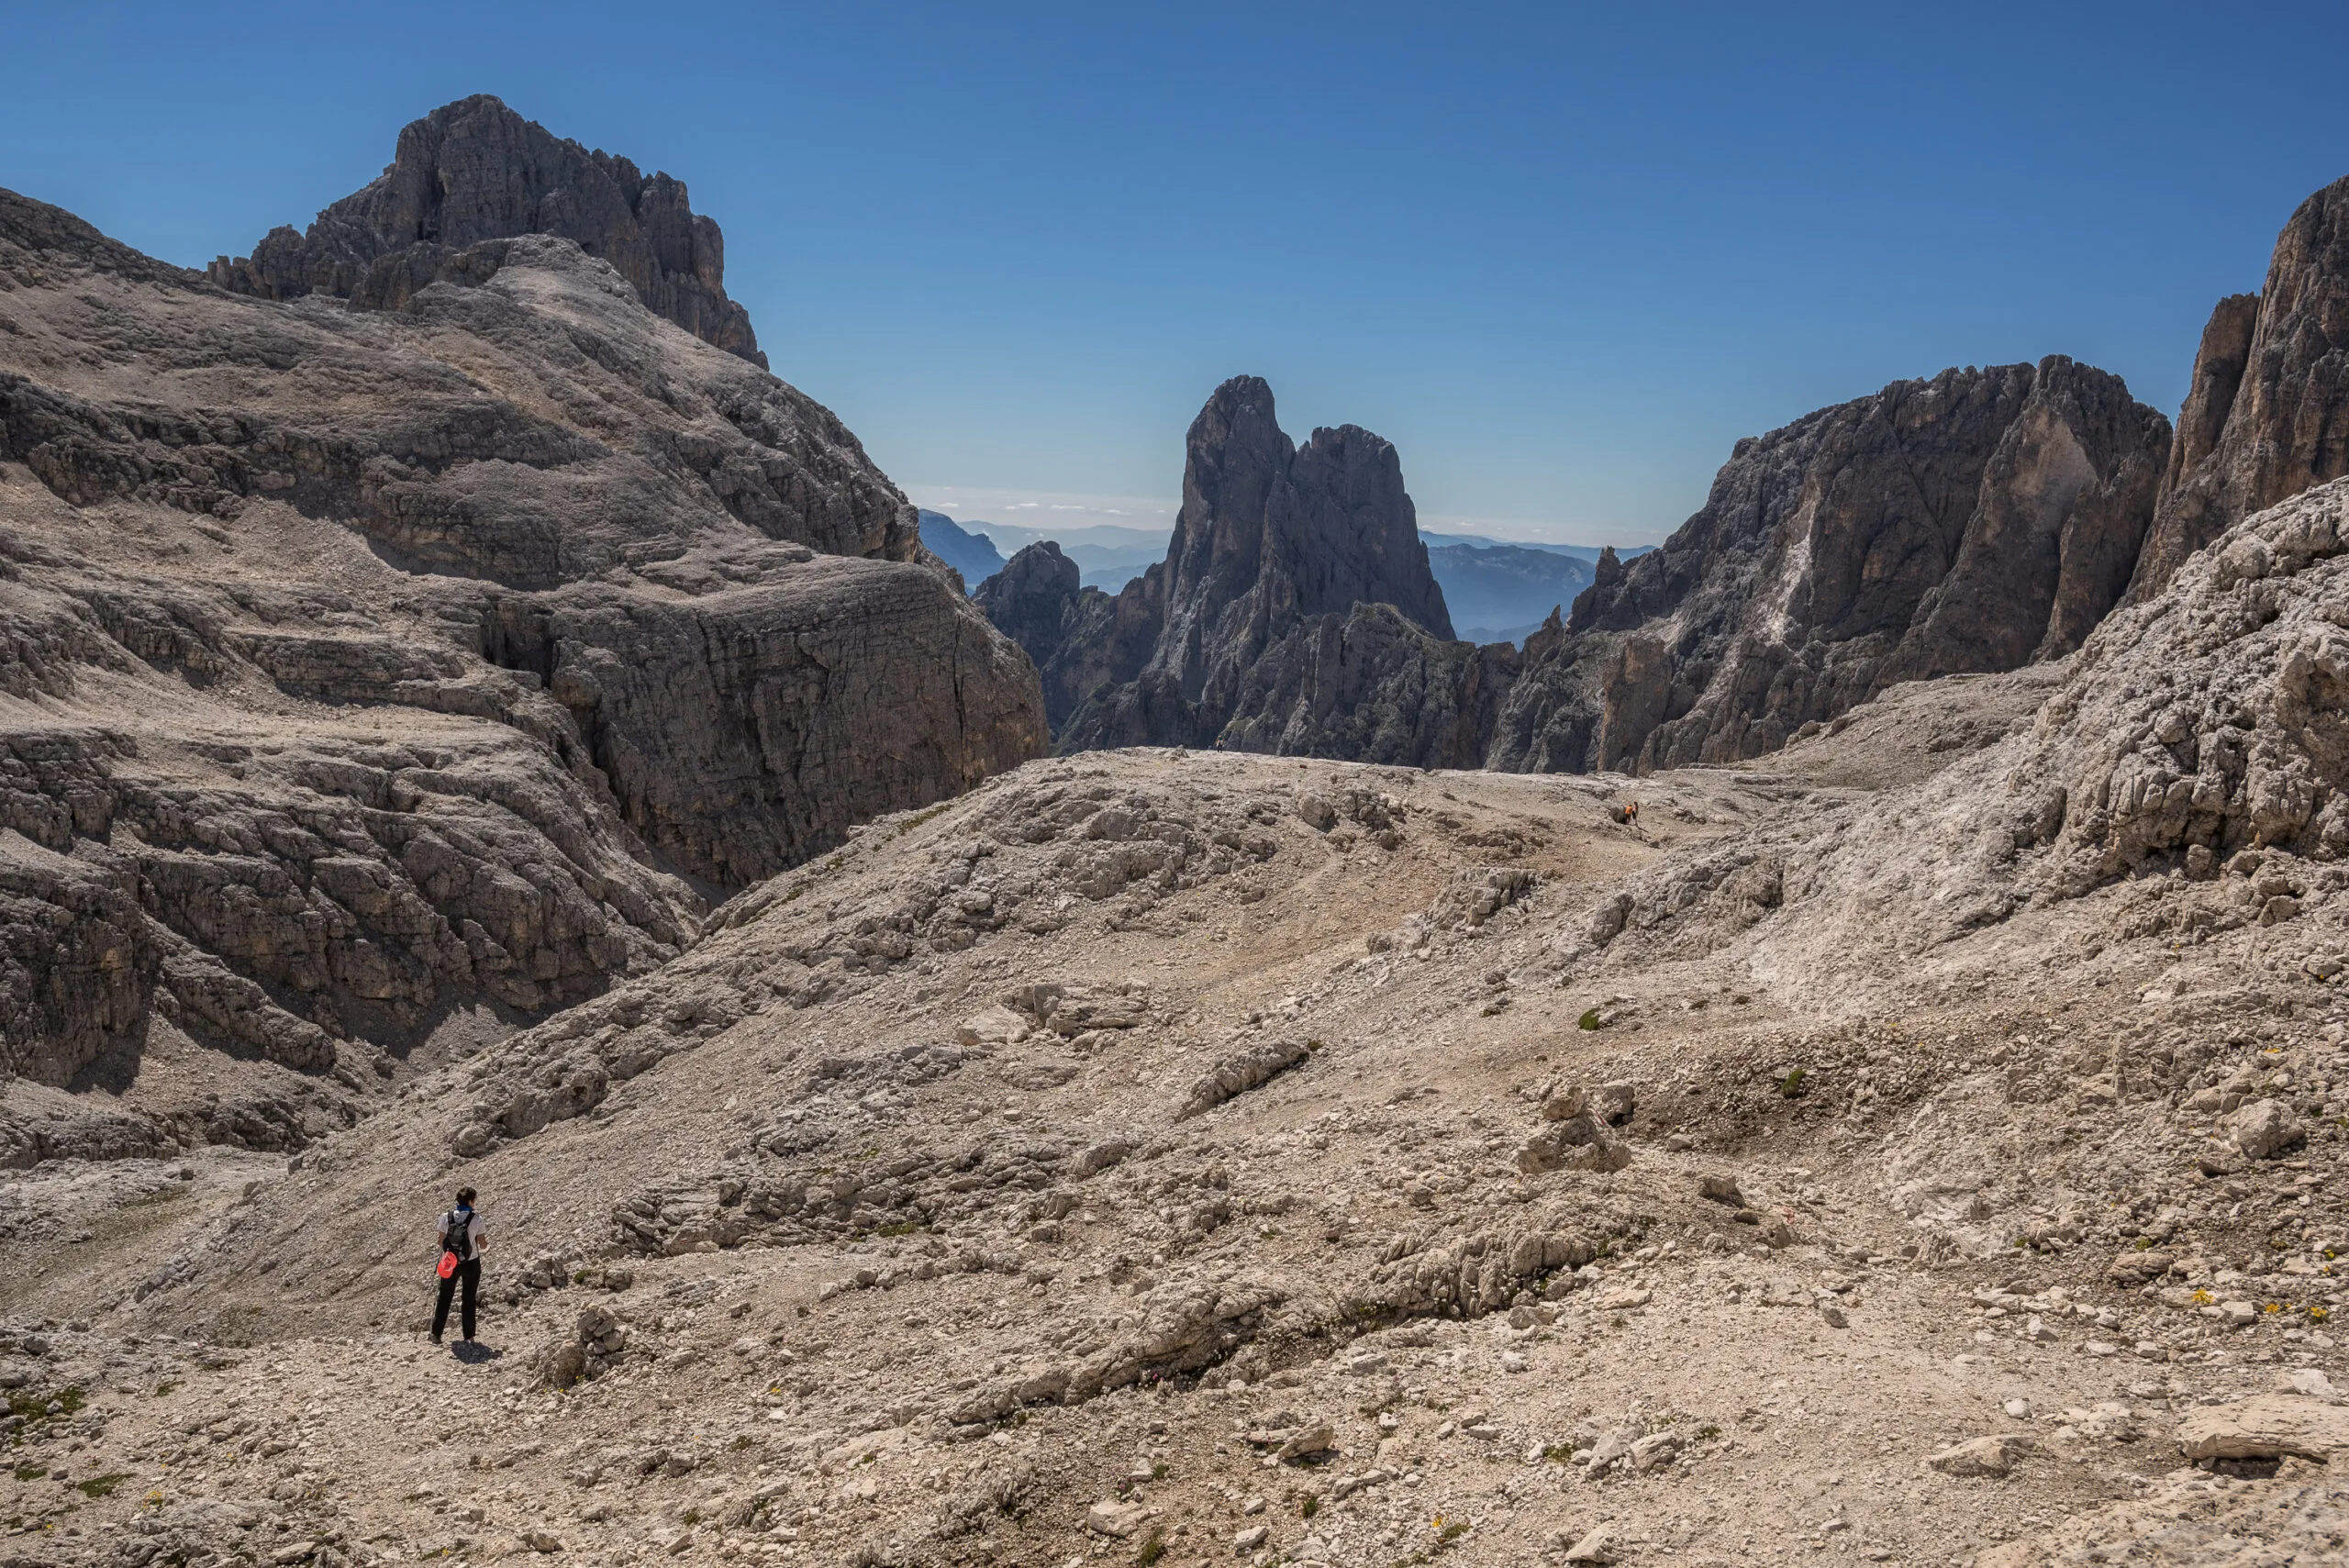 Sommets du groupe de montagnes Pale di San Martino, de gauche à droite, Cima Canali, Cimerlo, Sass Maor, Cima della Madonna, vus du col Pradidali Basso, au pied du glacier de Fradusta, Dolomites, Italie.